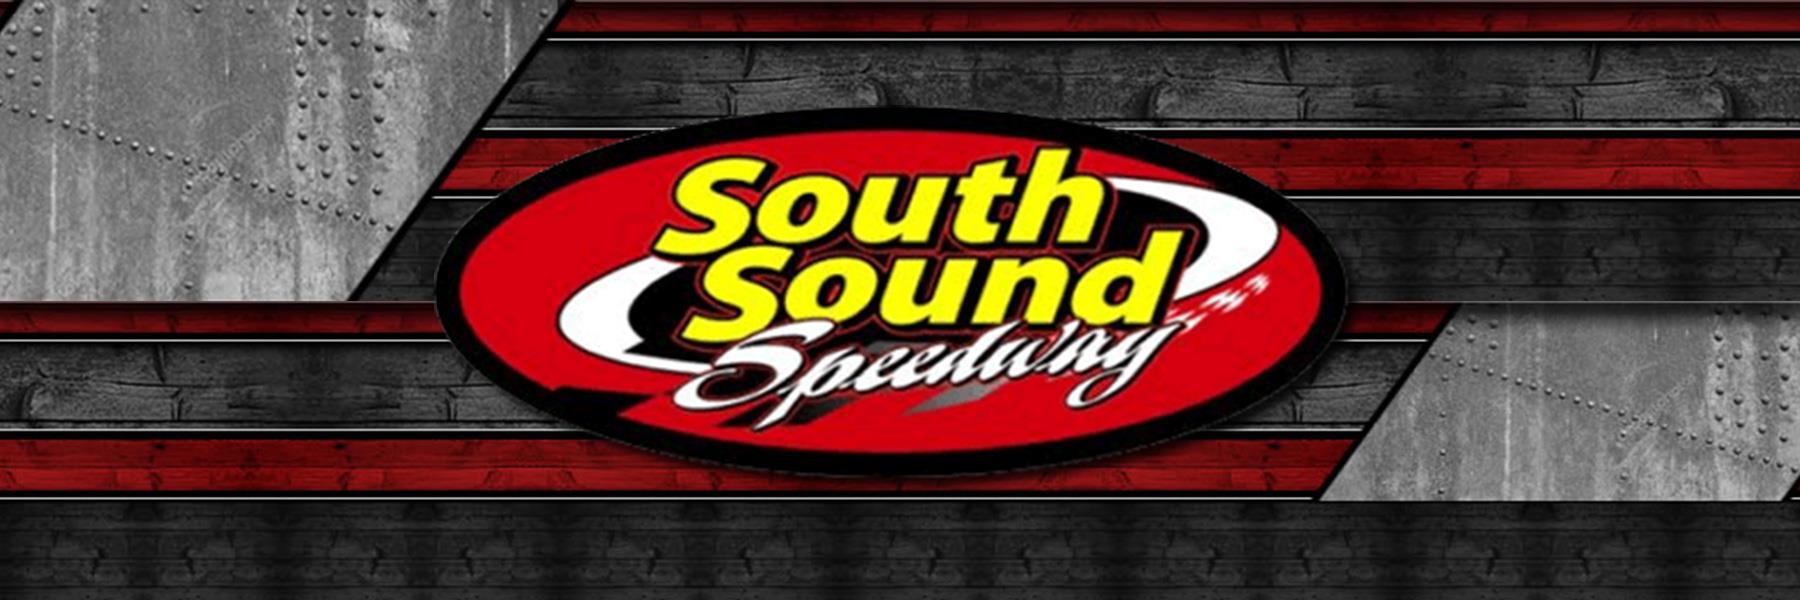 7/24/2021 - South Sound Speedway